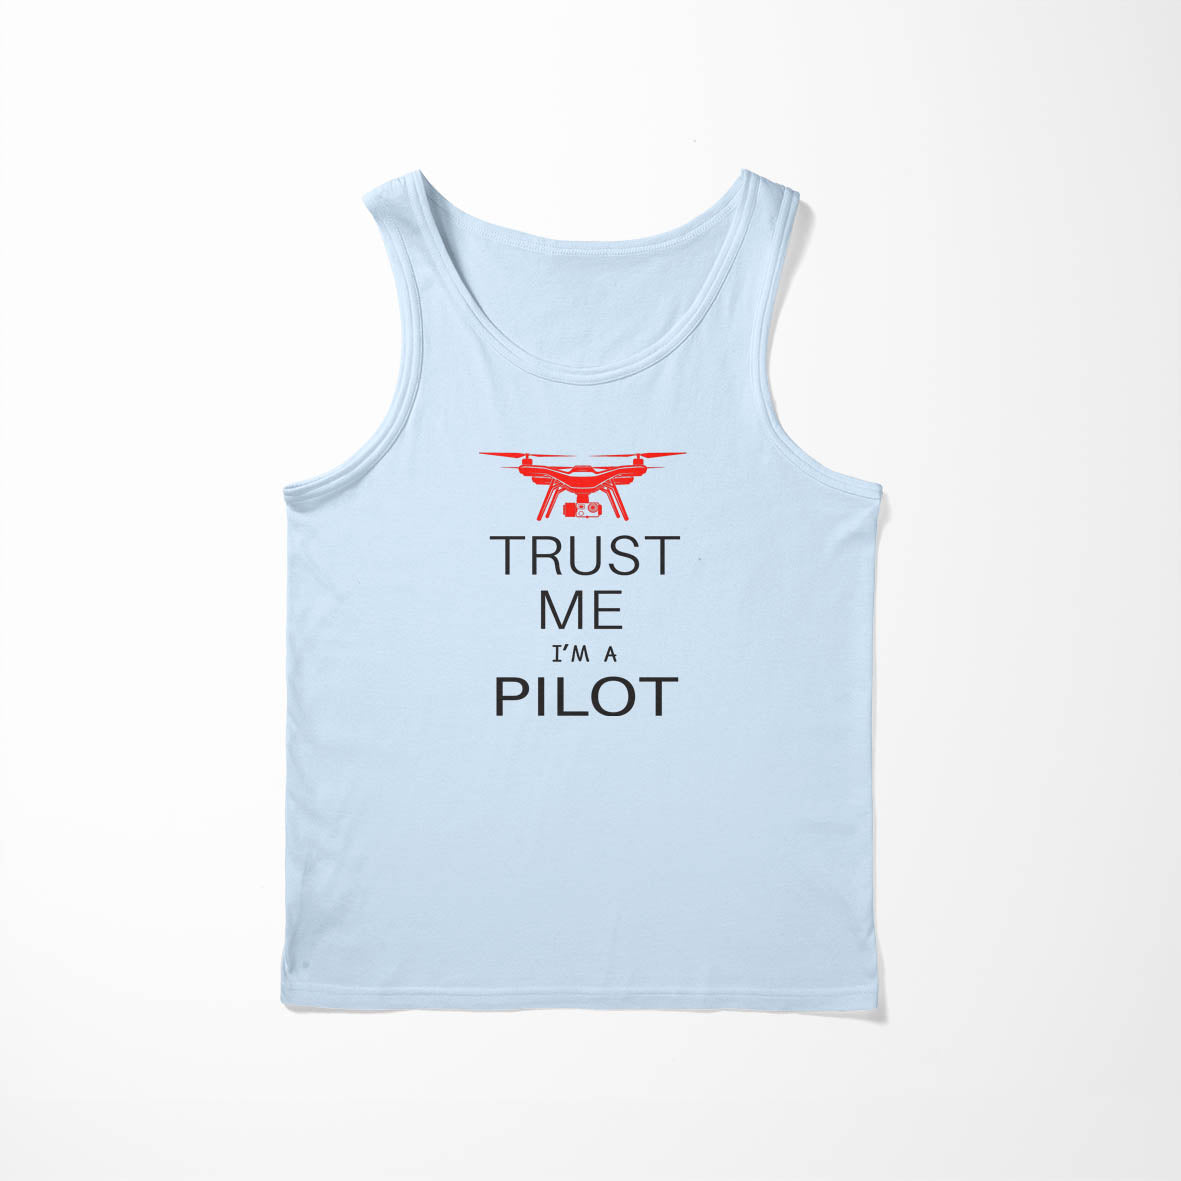 Trust Me I'm a Pilot (Drone) Designed Tank Tops